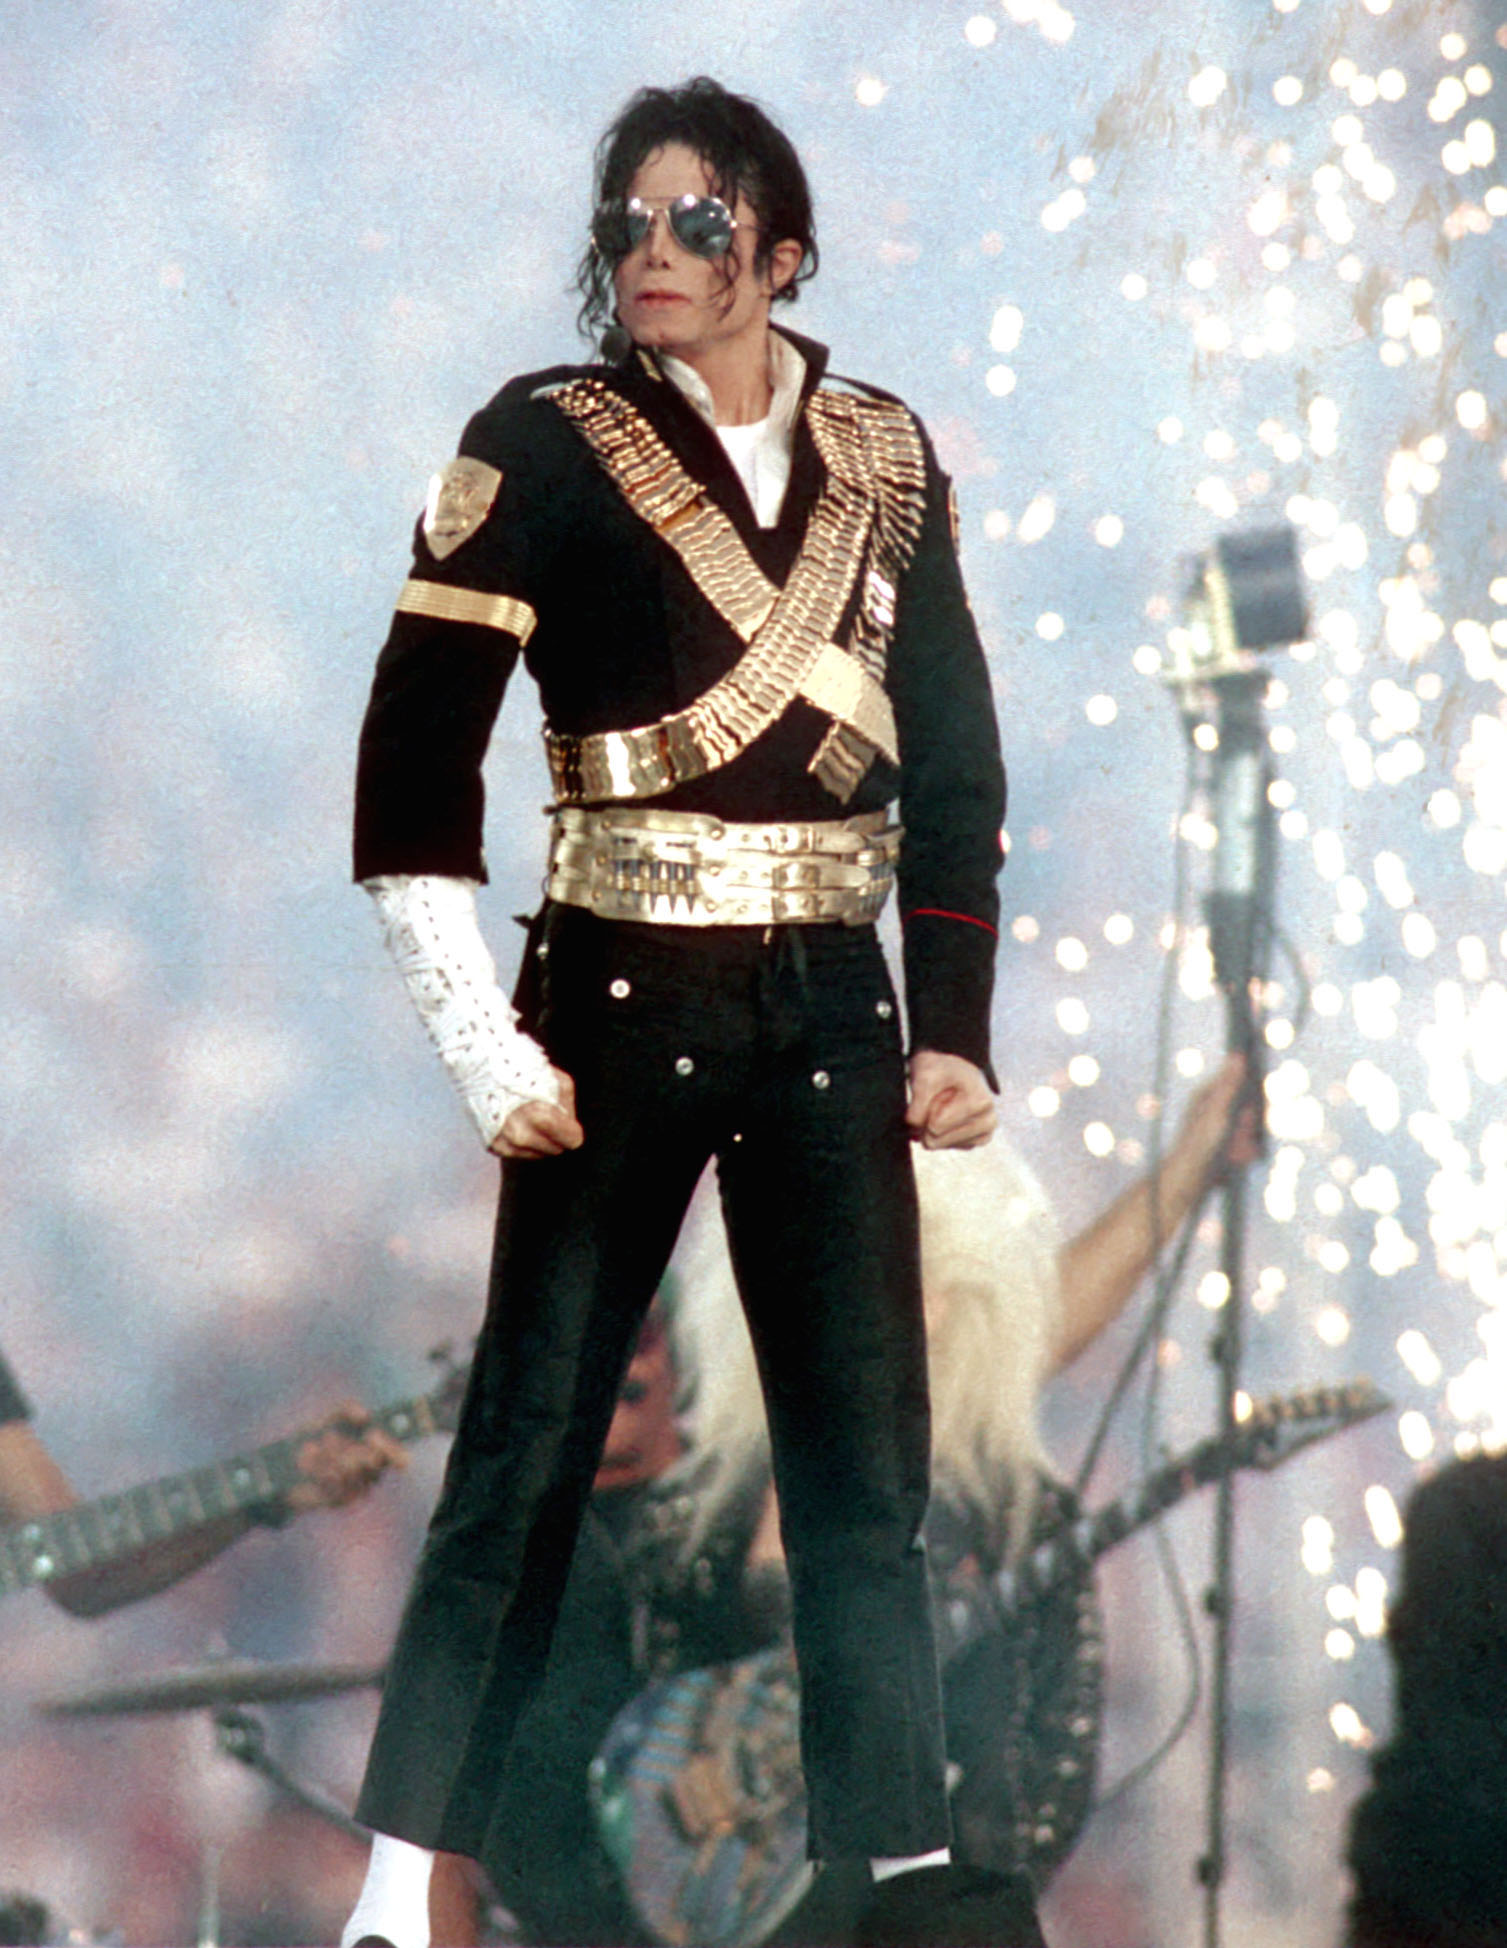 Michael Jackson performs during Super Bowl XXVII on Jan. 31, 1993 in Pasadena, Calif.